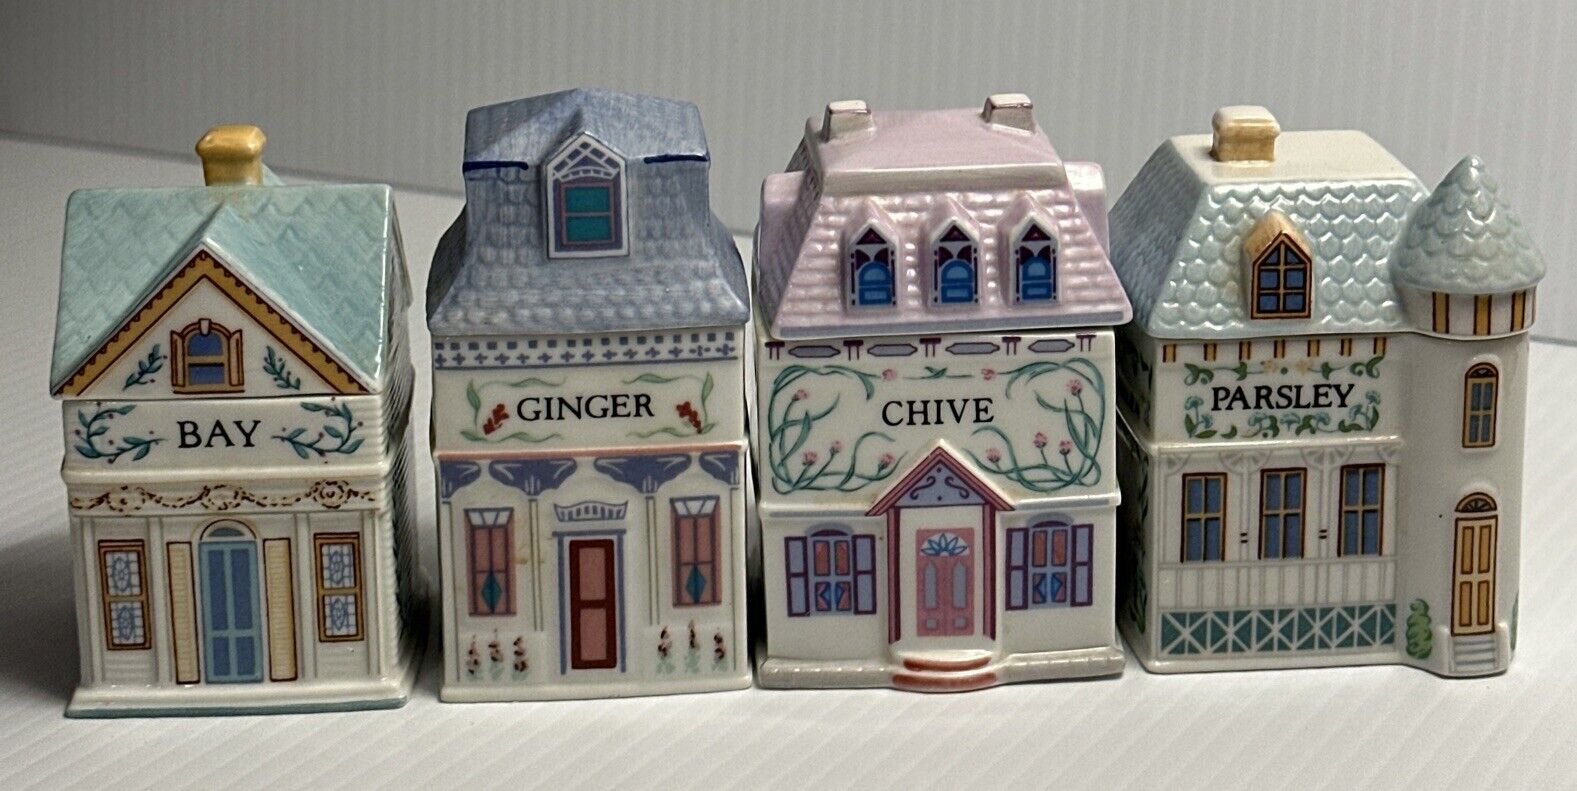 4 Vintage Lenox Spice Village 1989 Spice Jars ( Bay, Ginger, Chive & Parsley )